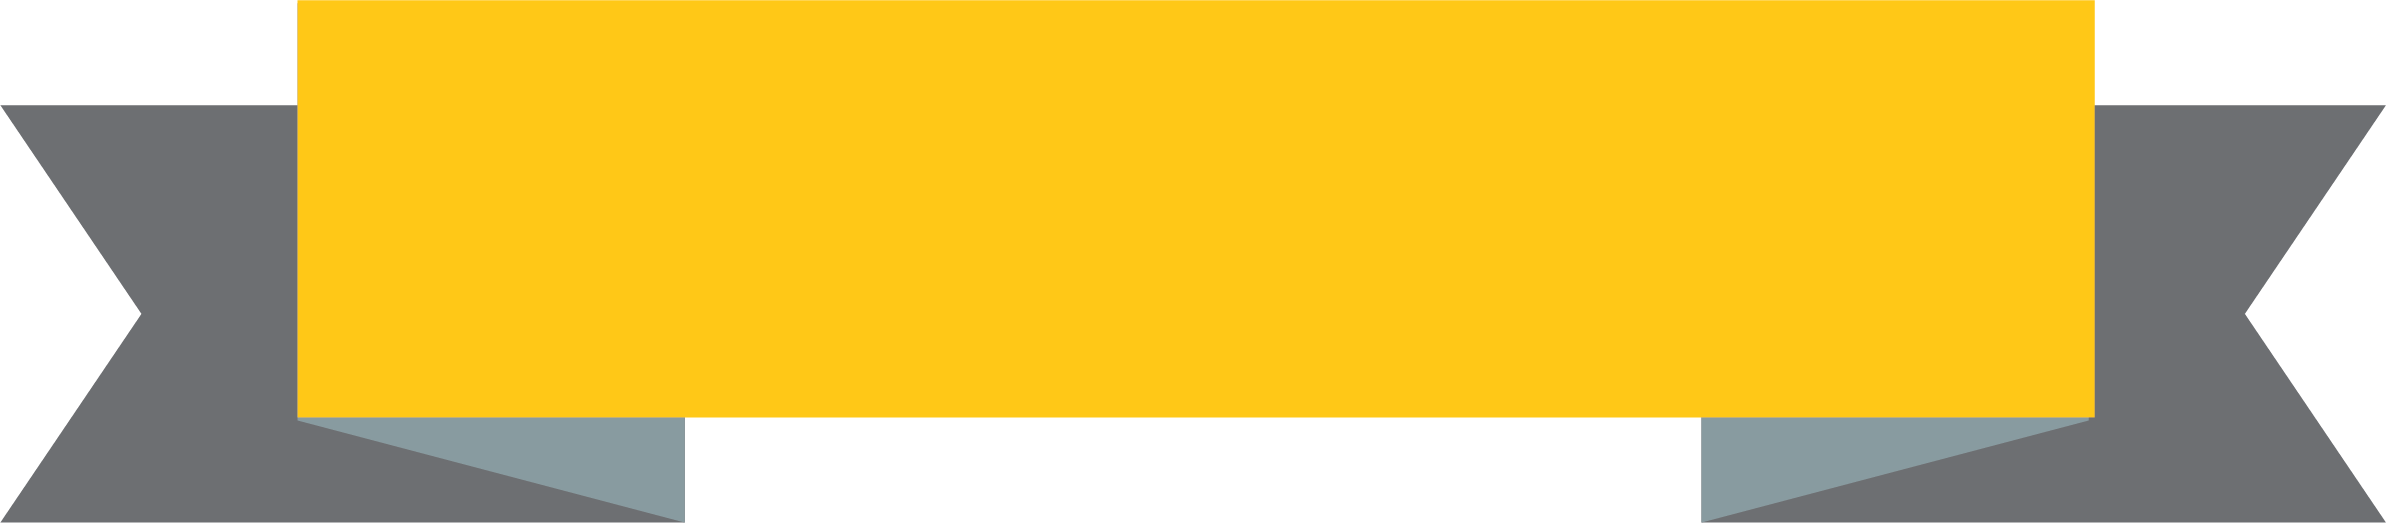 Geel lint PNG-Afbeelding met Transparante achtergrond